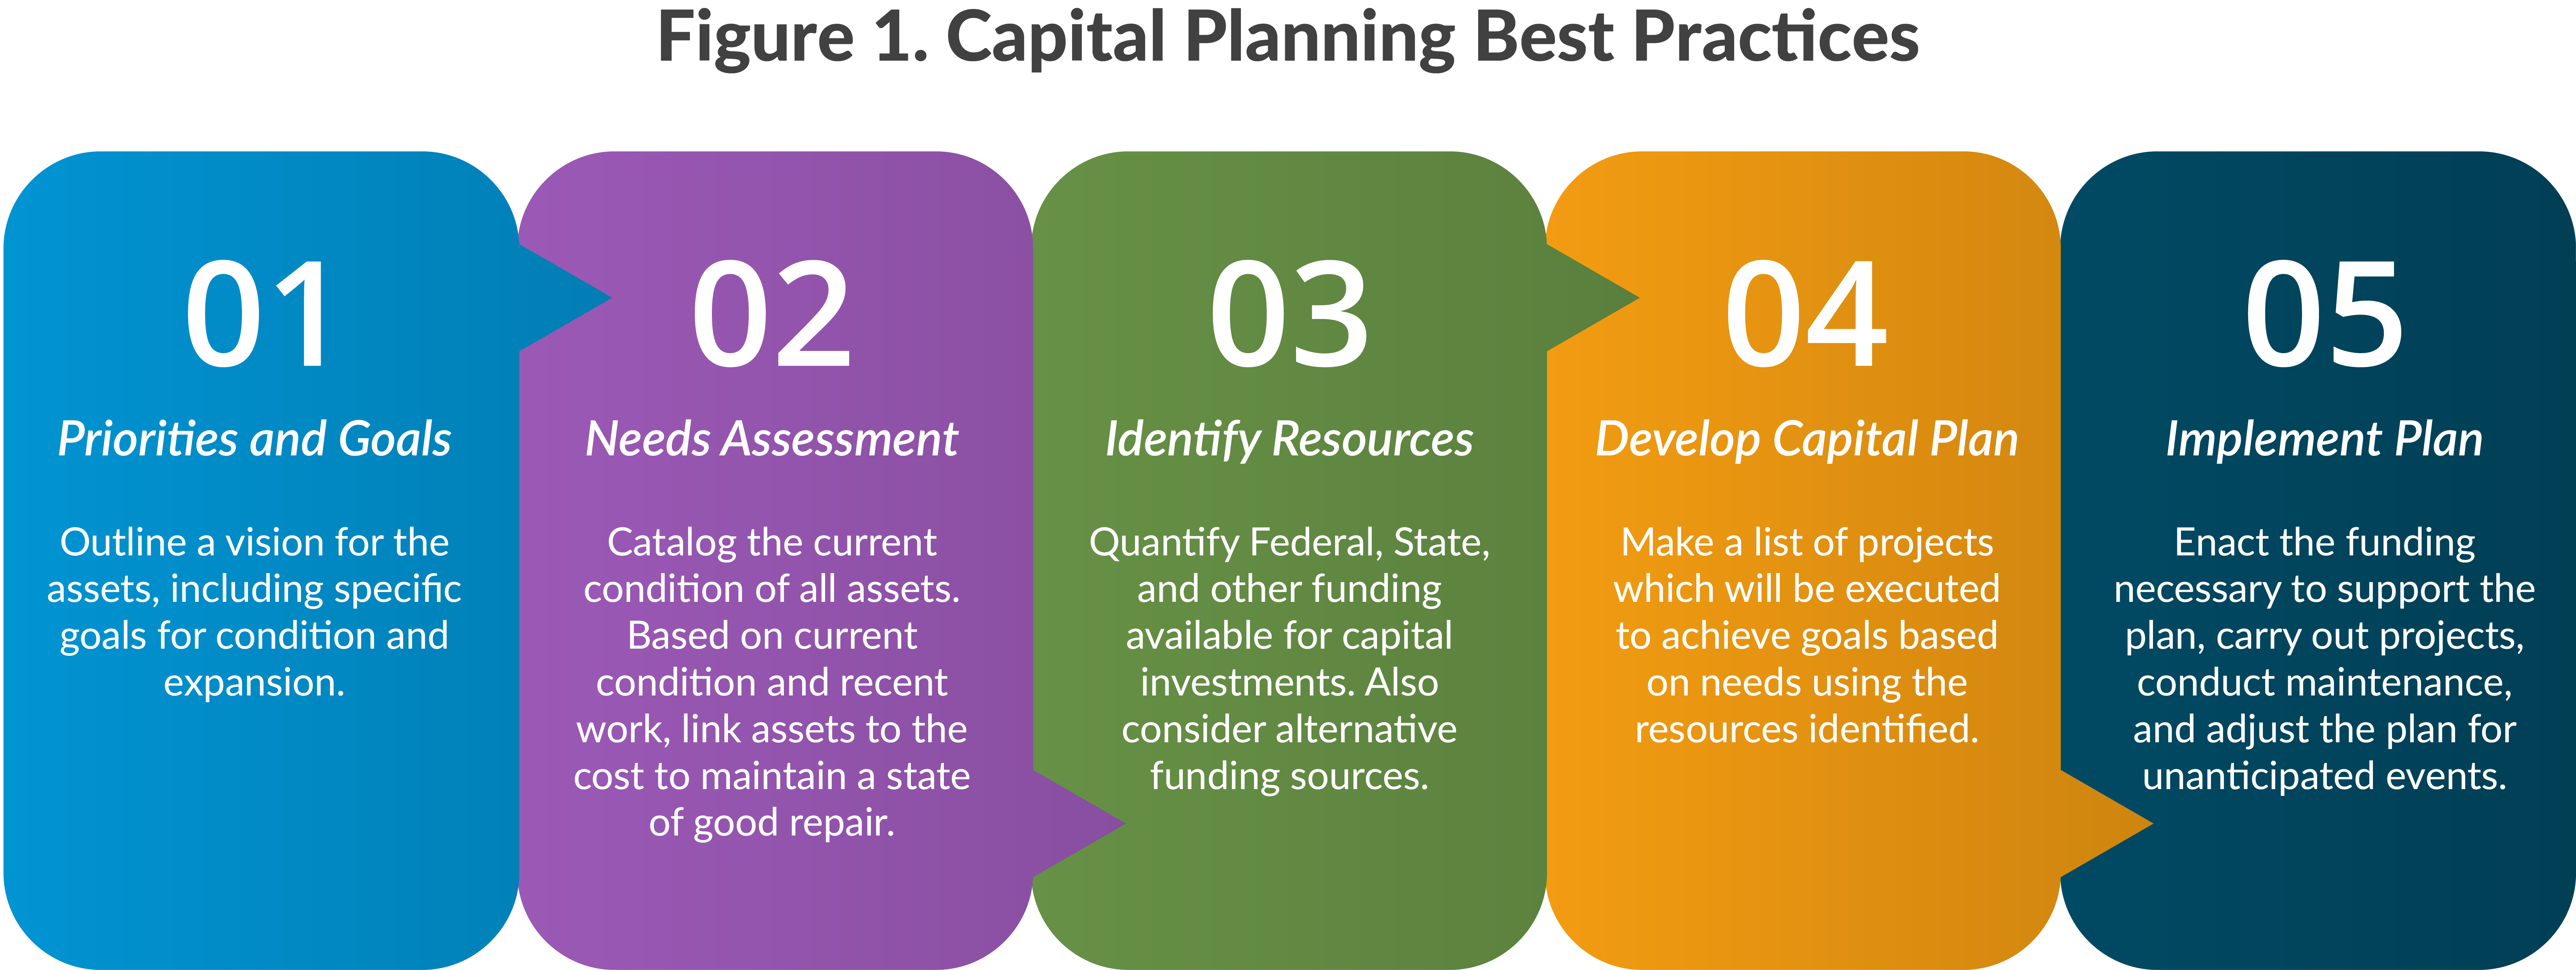 Figure 1. Capital Planning Best Practices